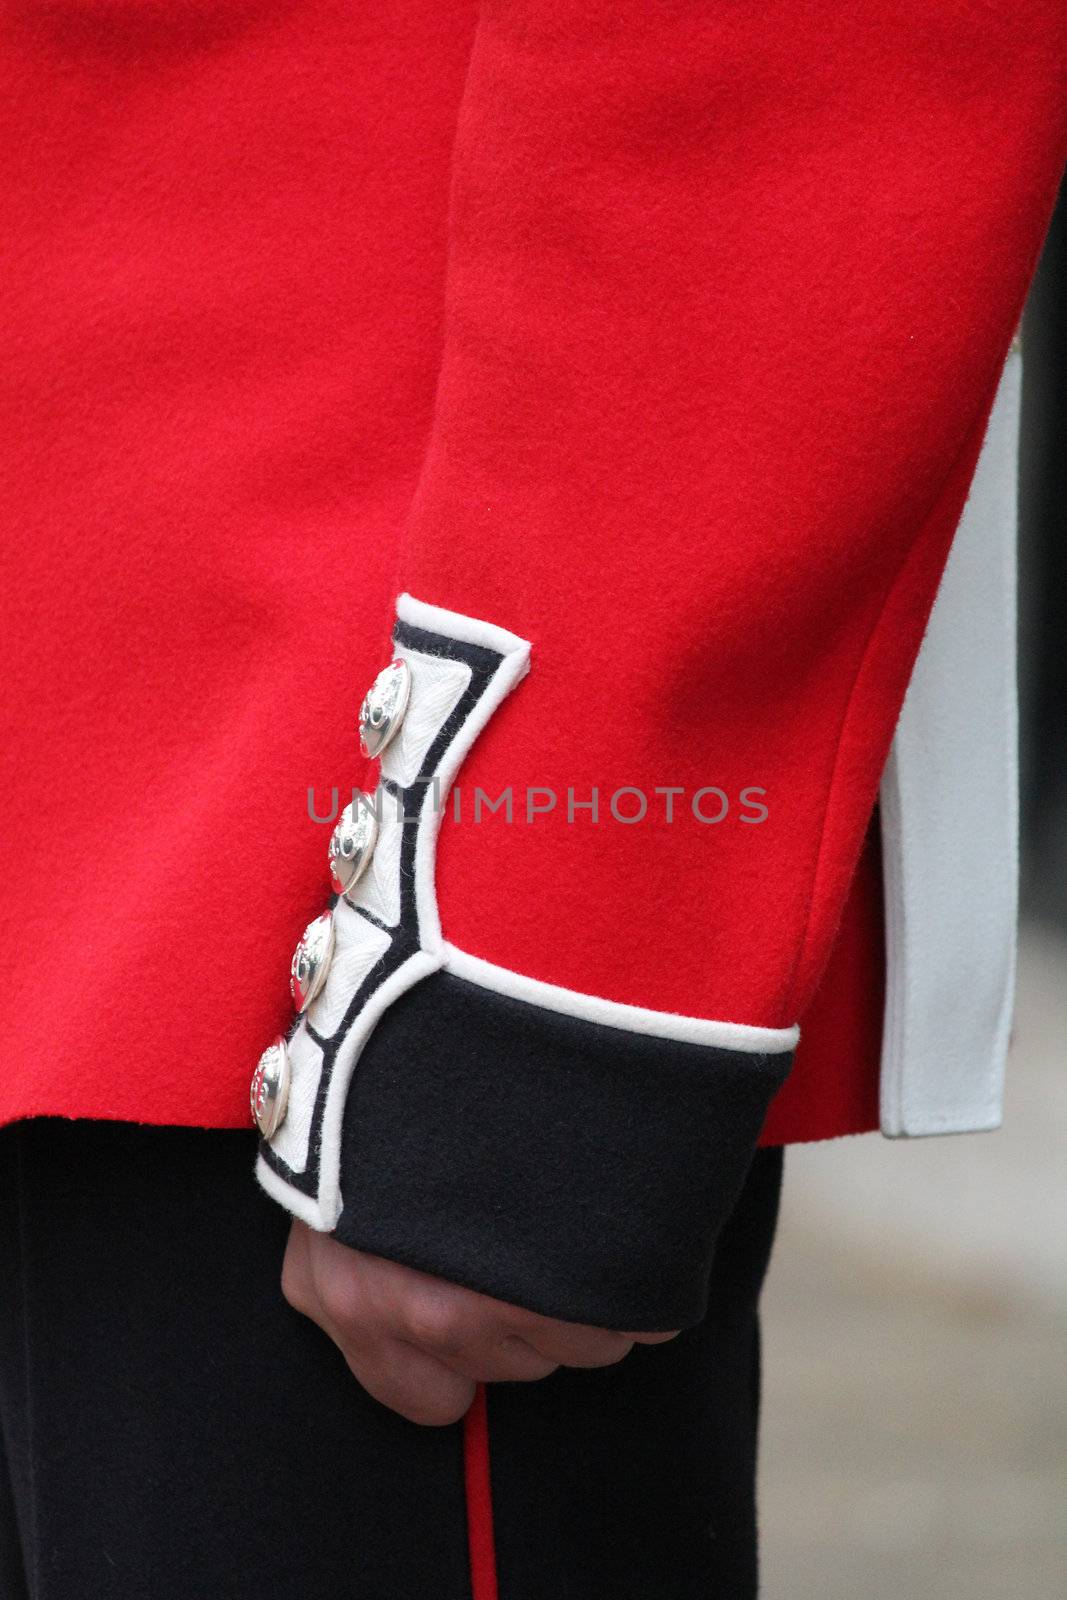 uniform of a grenadier guard